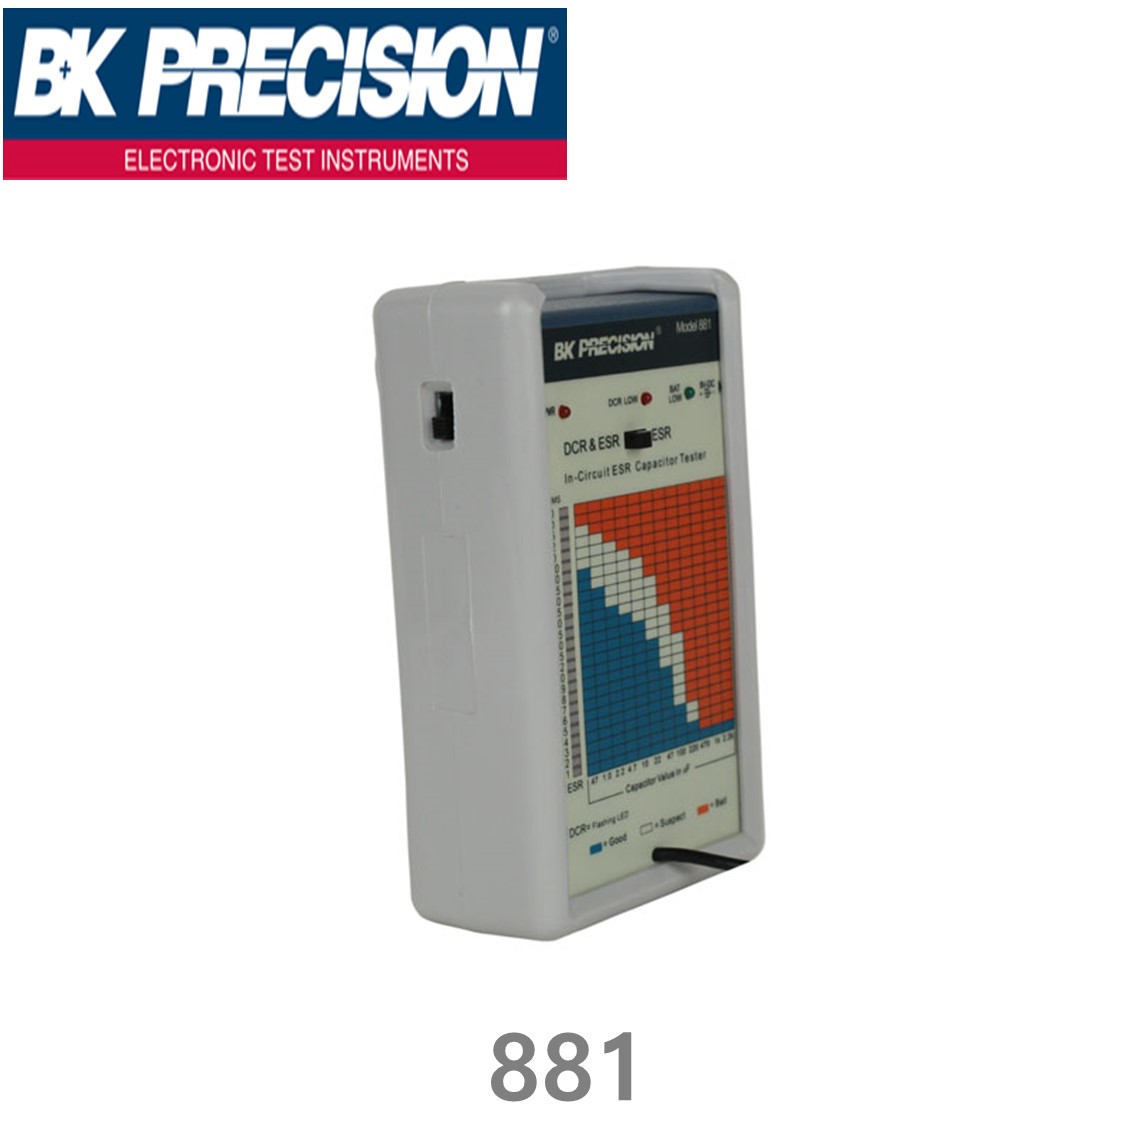 [ BK PRECISION ] BK 881, In-Circuit ESR Tester, ESR 테스터, B&K 881